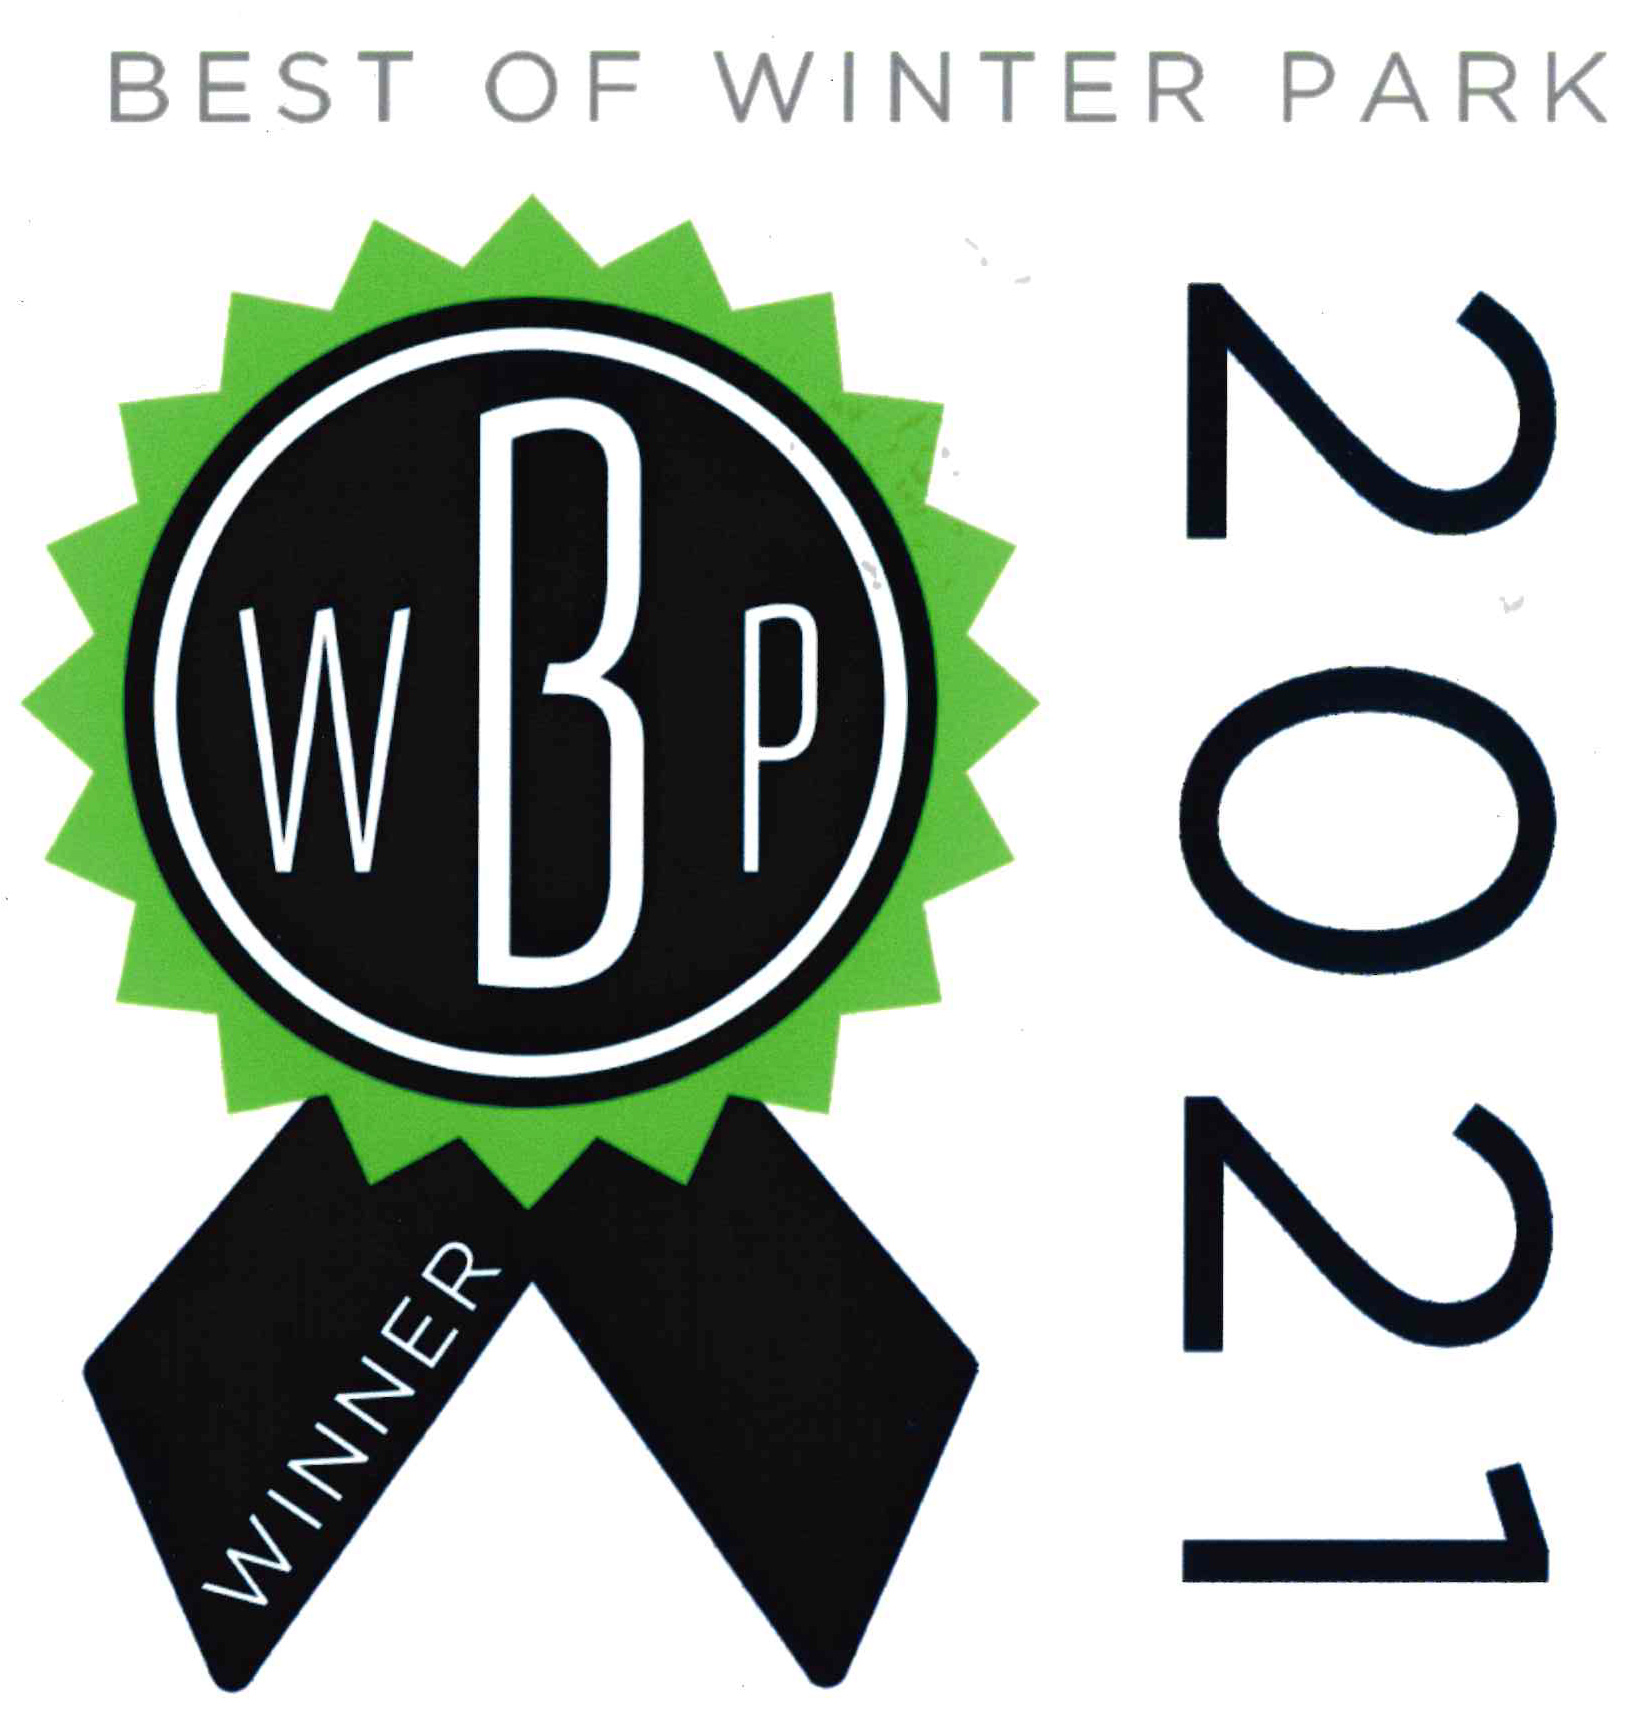 Best-of-Winter-Park-logo-2021